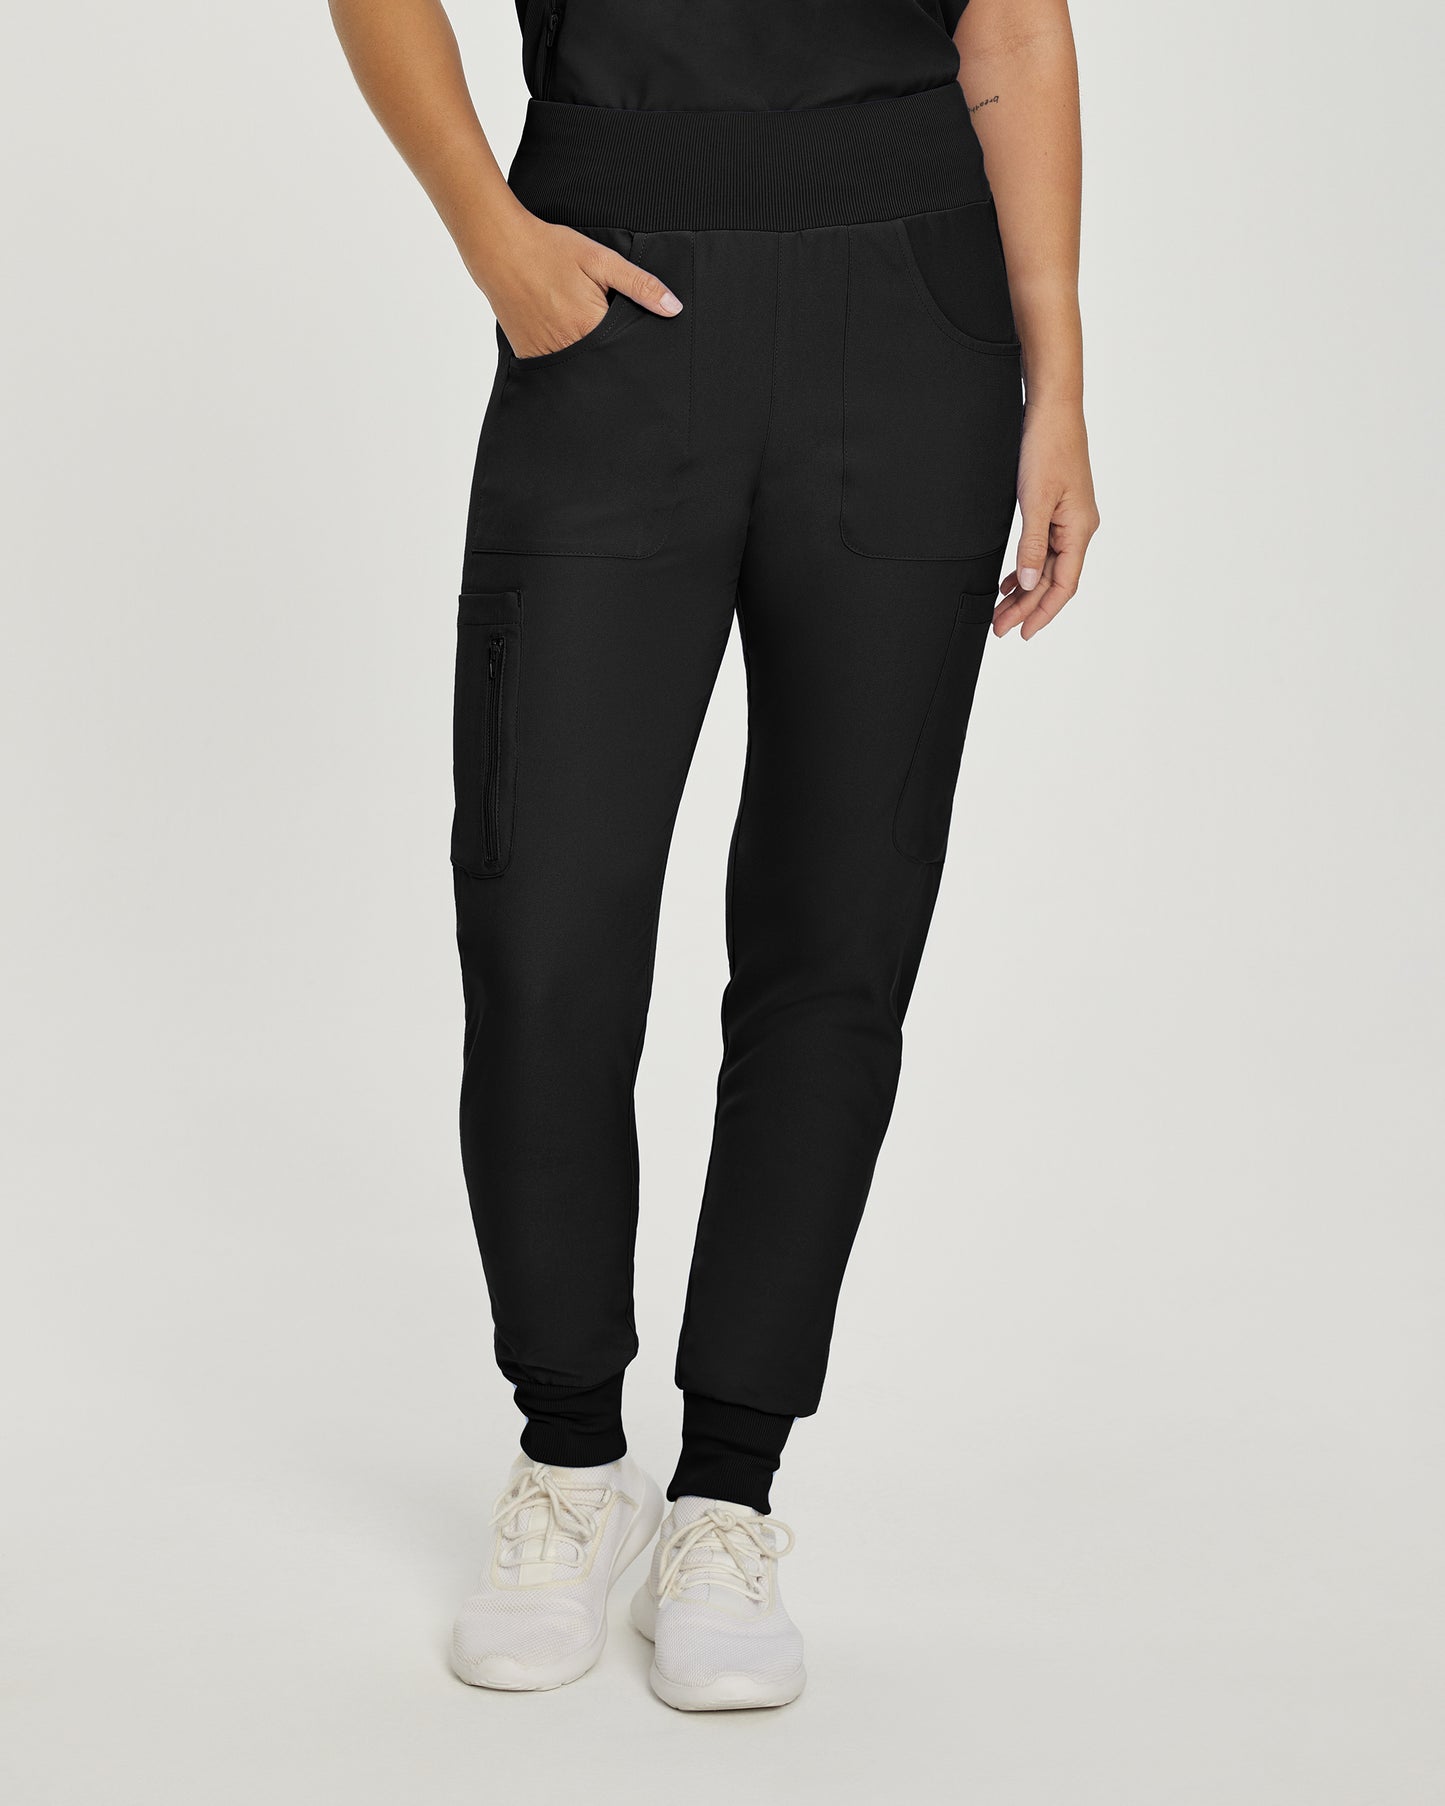 Women's jogger pants - FORWARD - L401T tall